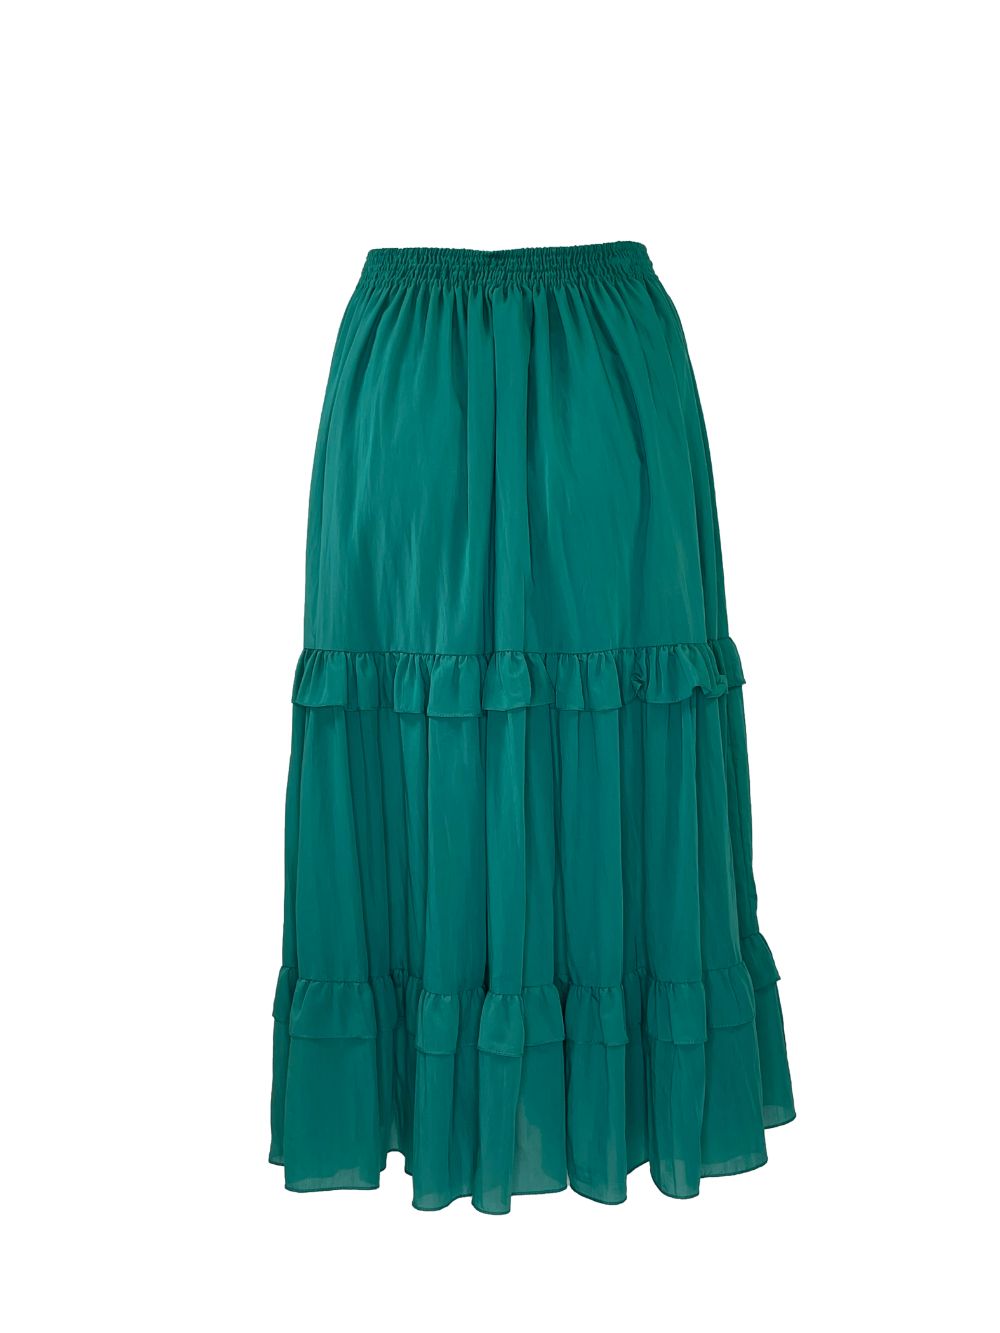 Aurora Mid Skirt by KonaCoco